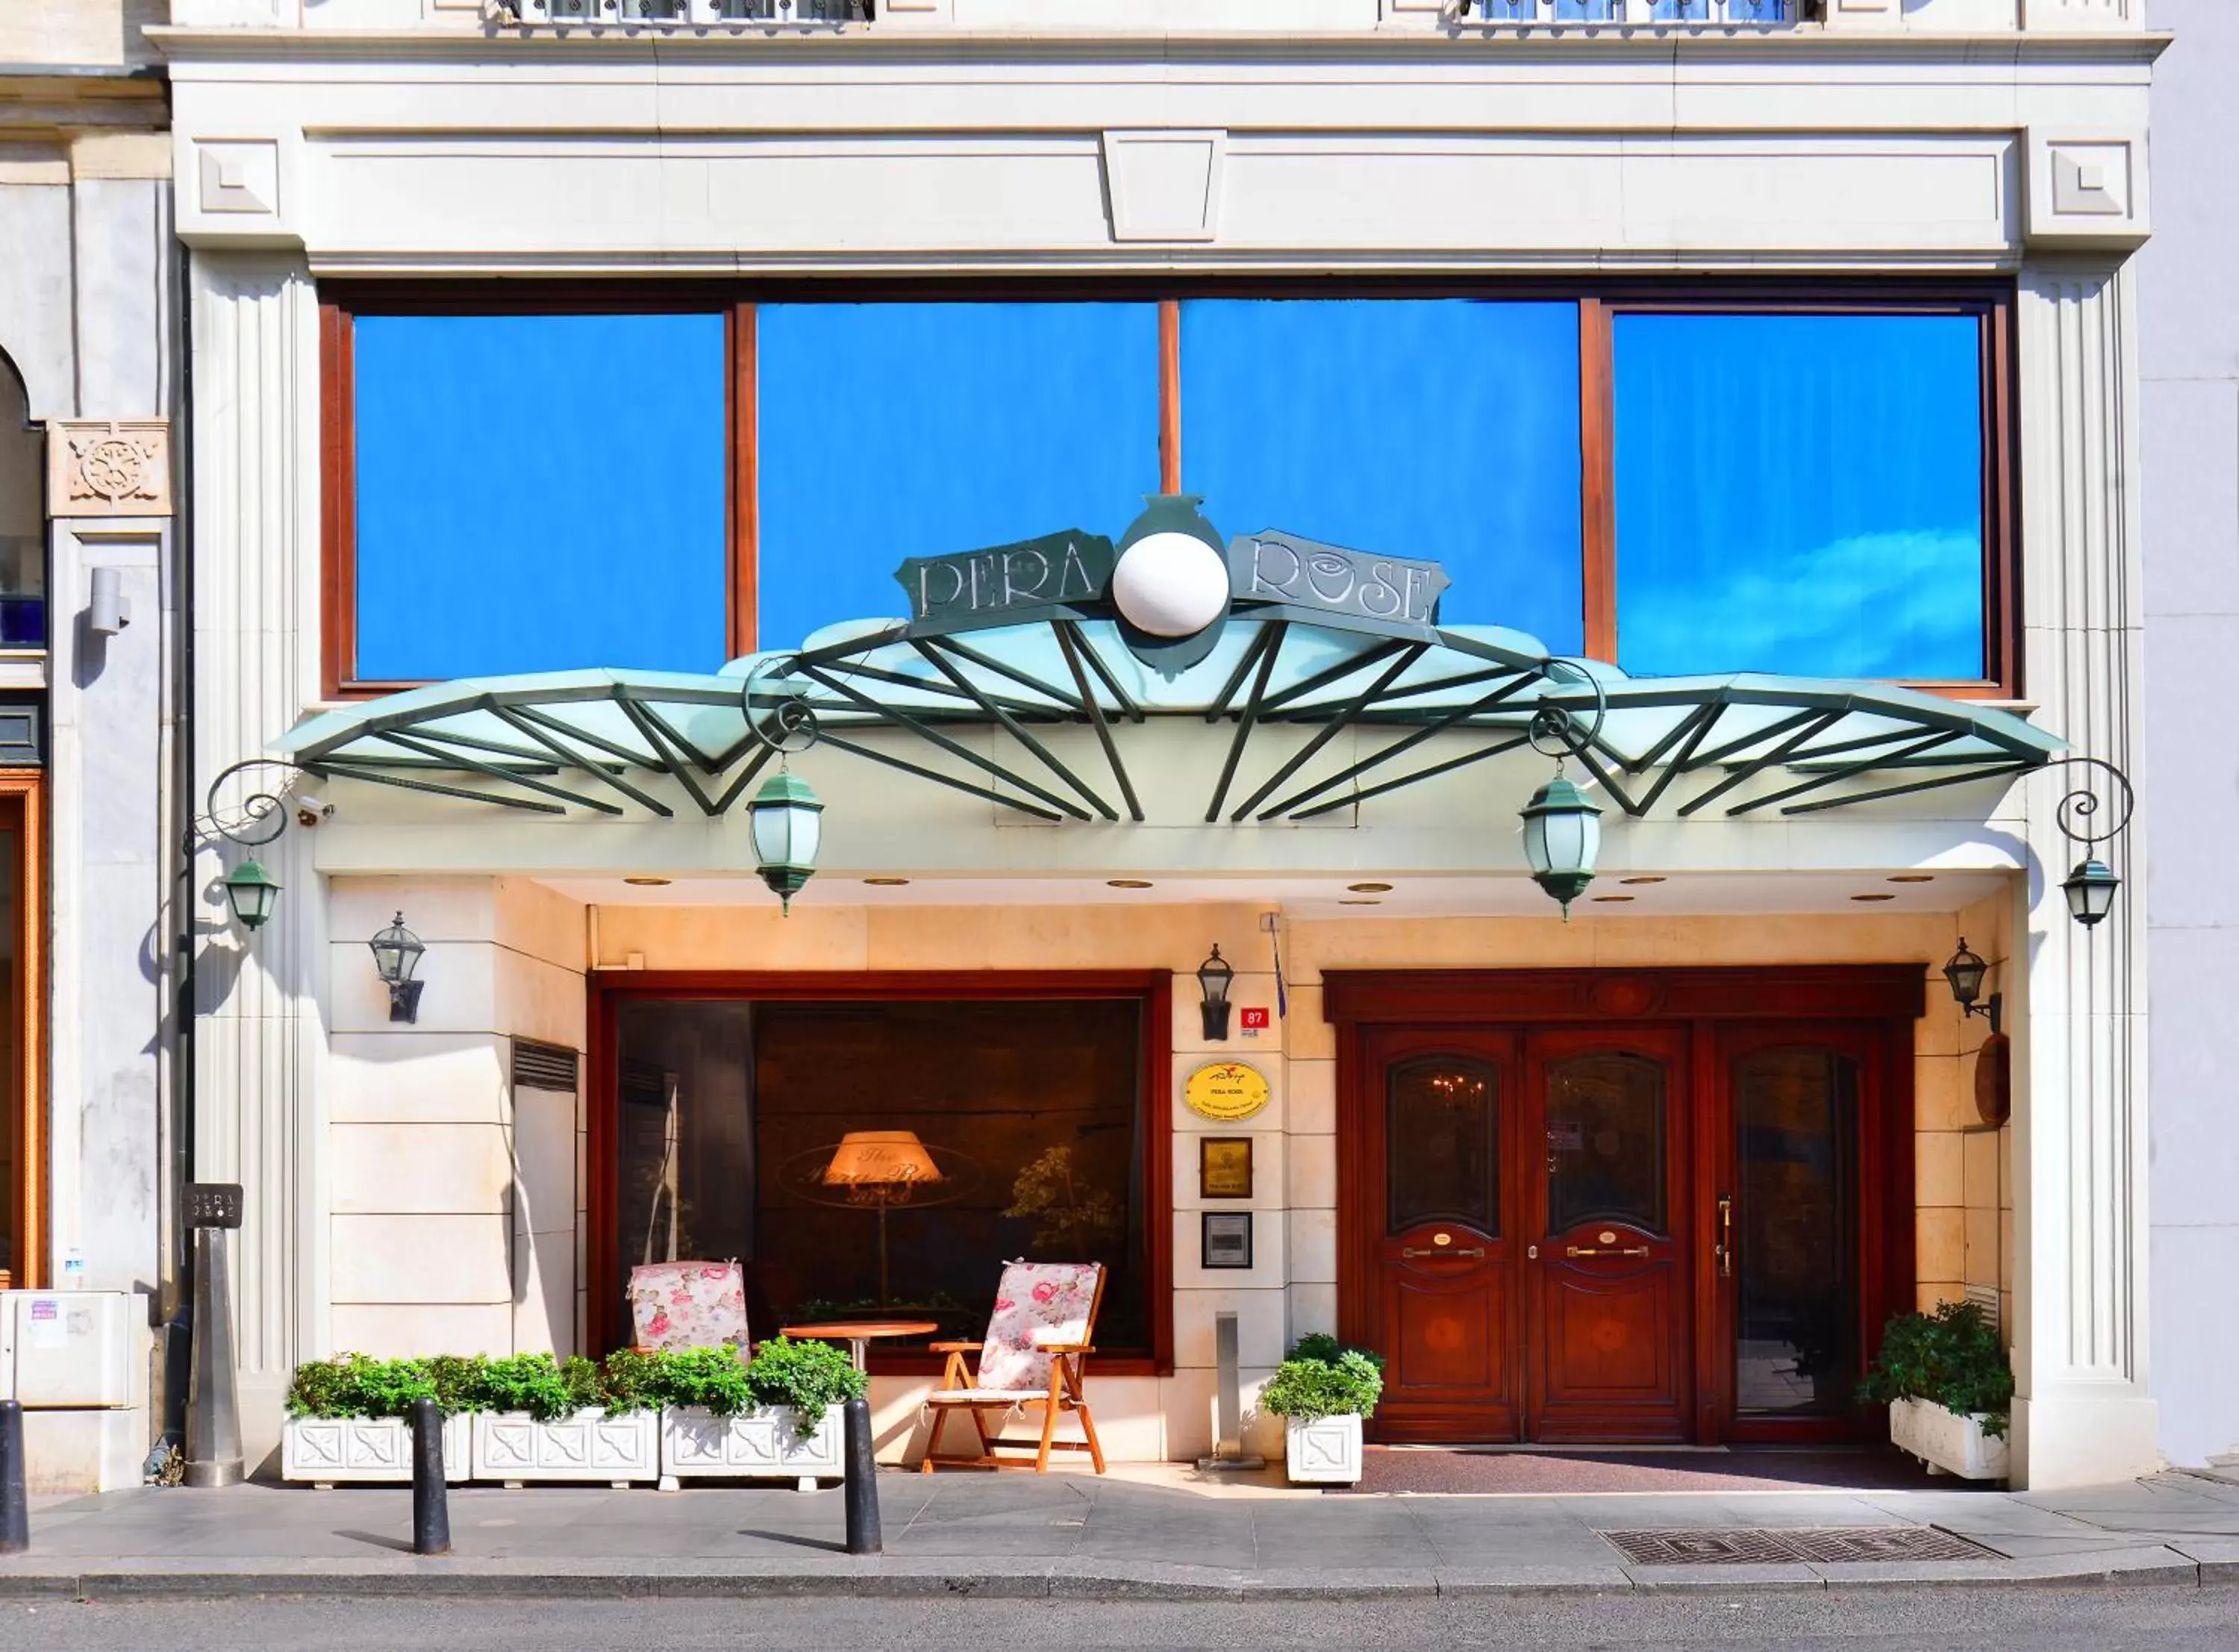 Facade/entrance in Pera Rose Hotel